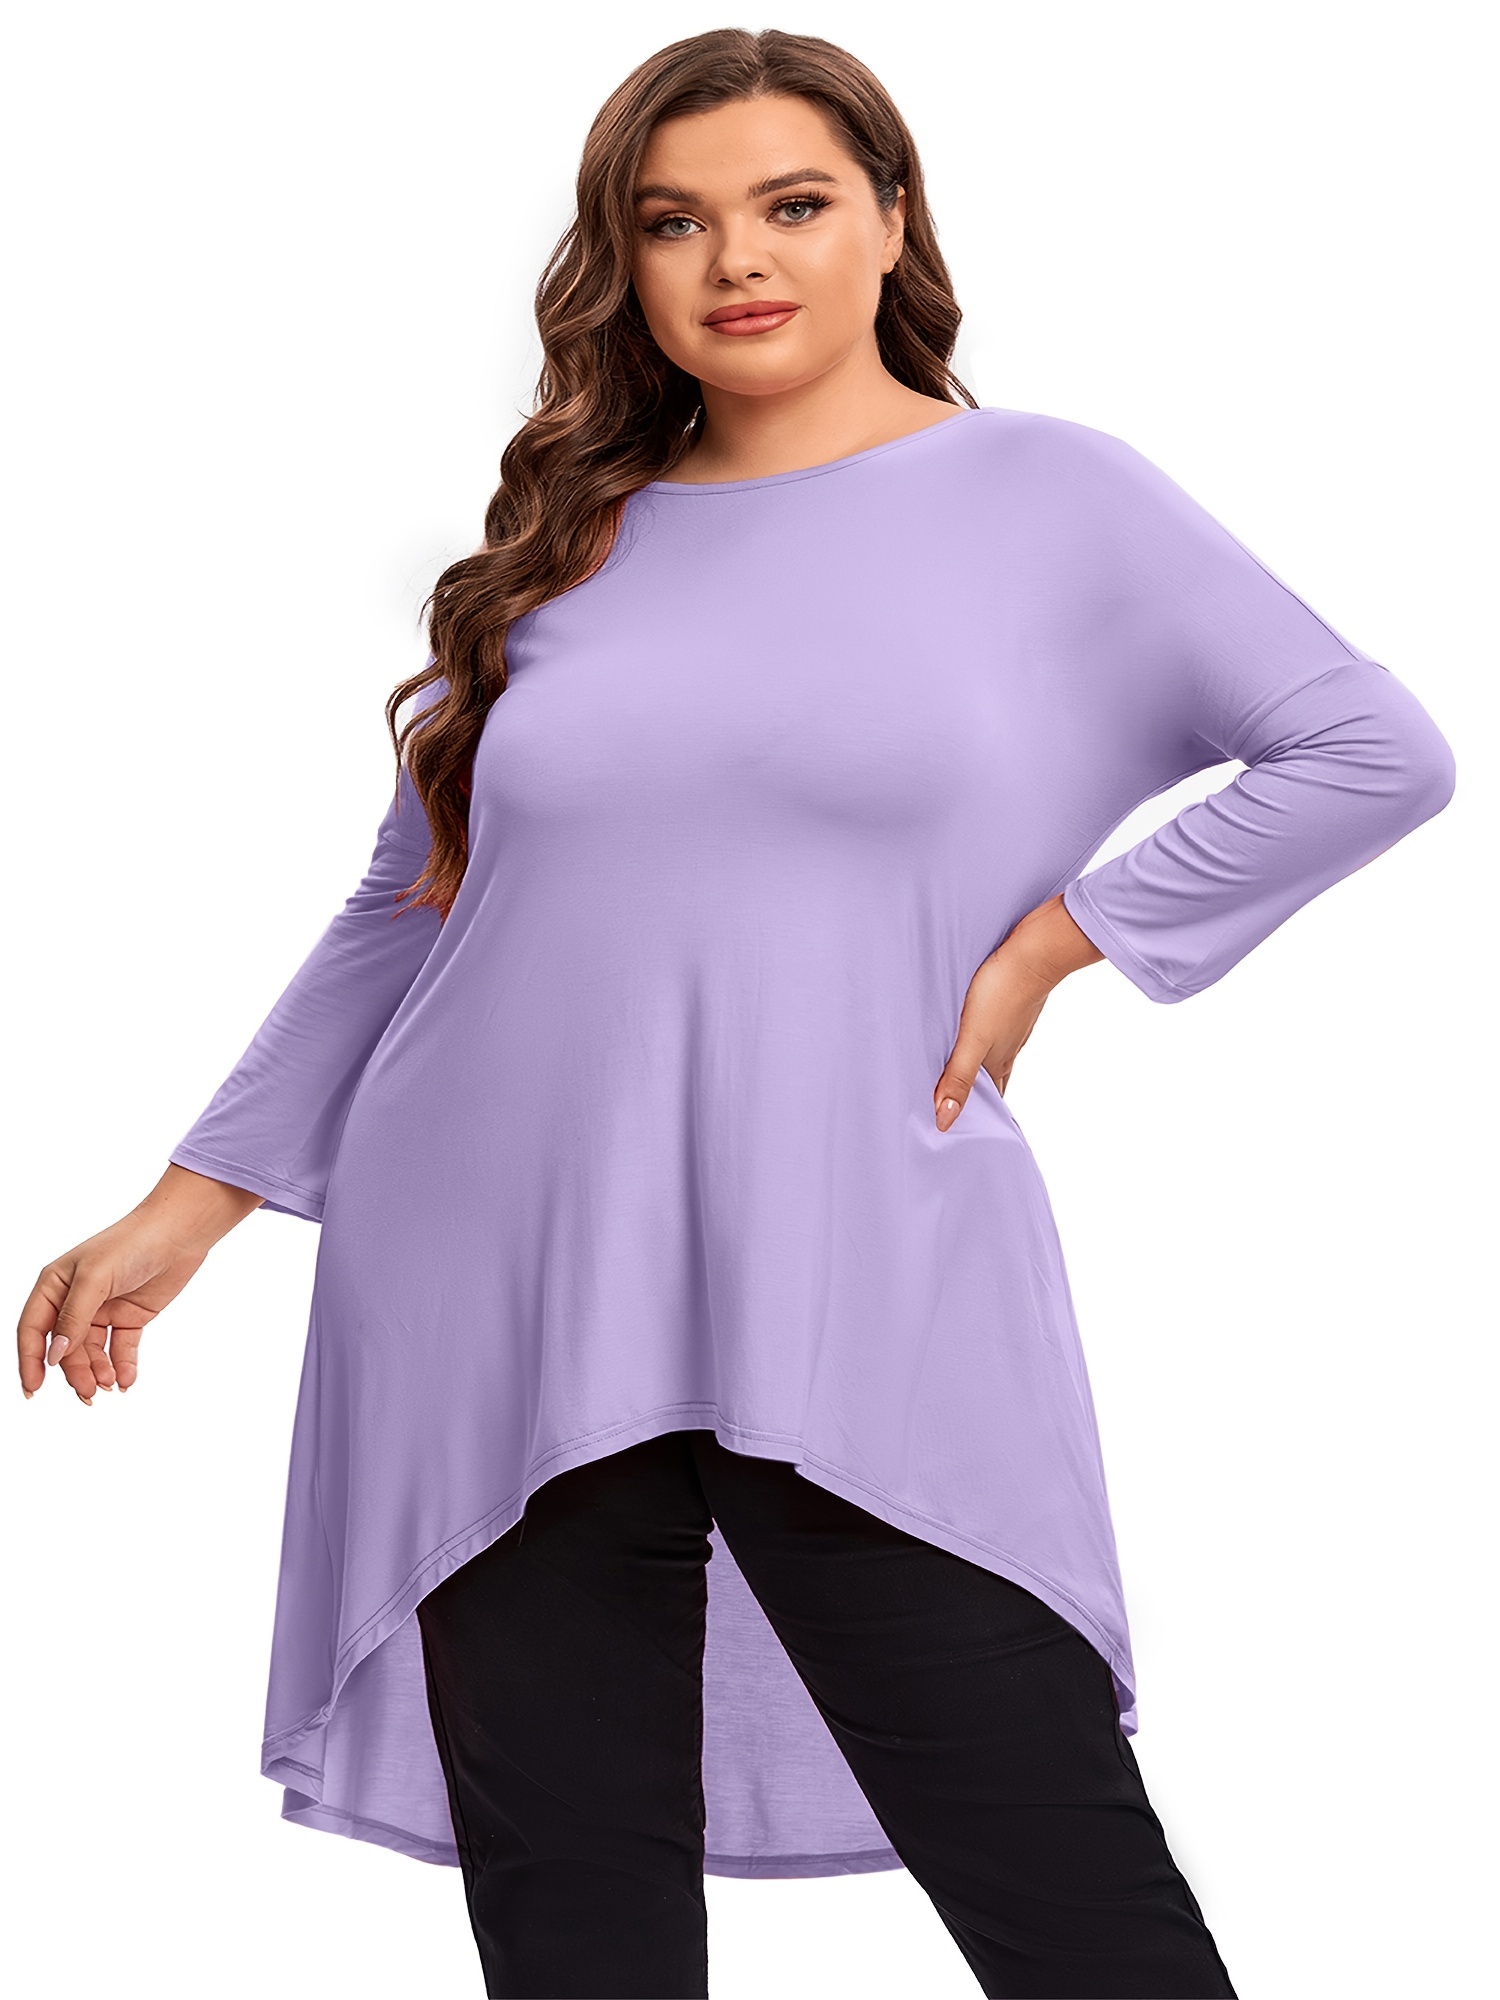 Buy theRebelinme Plus Size Women Purple Solid Color Smocked Sheer Peplum Top  online